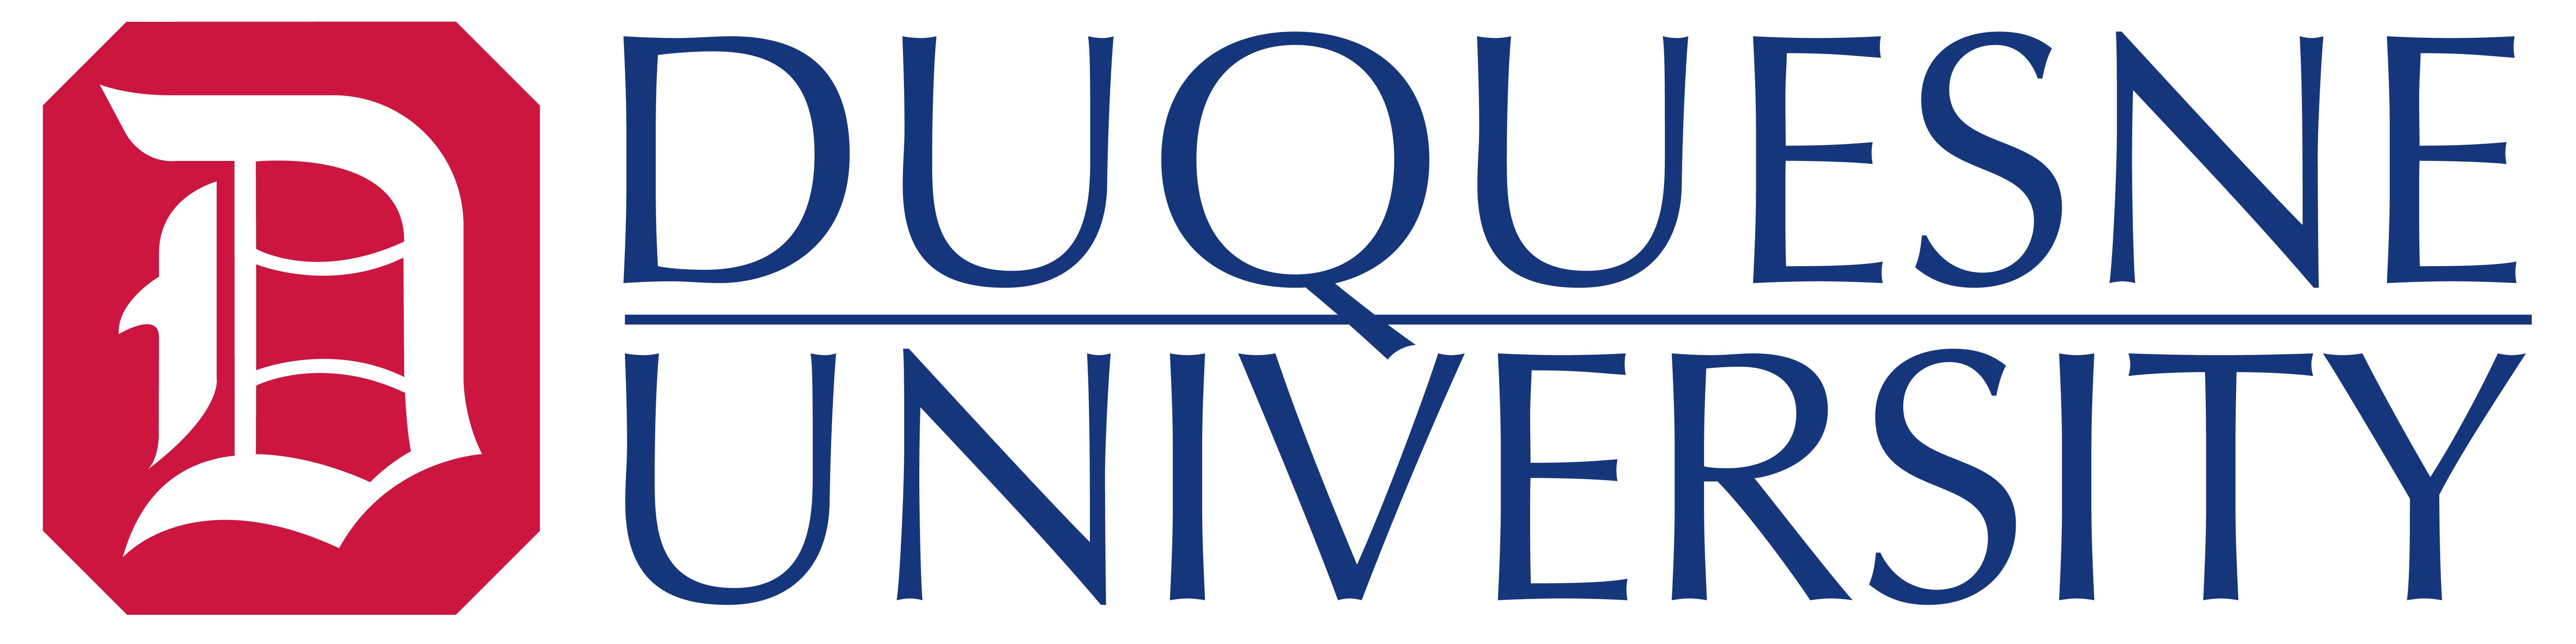 Duquesne University Logo - Duquesne Logo-01 - CGFNS International, Inc.